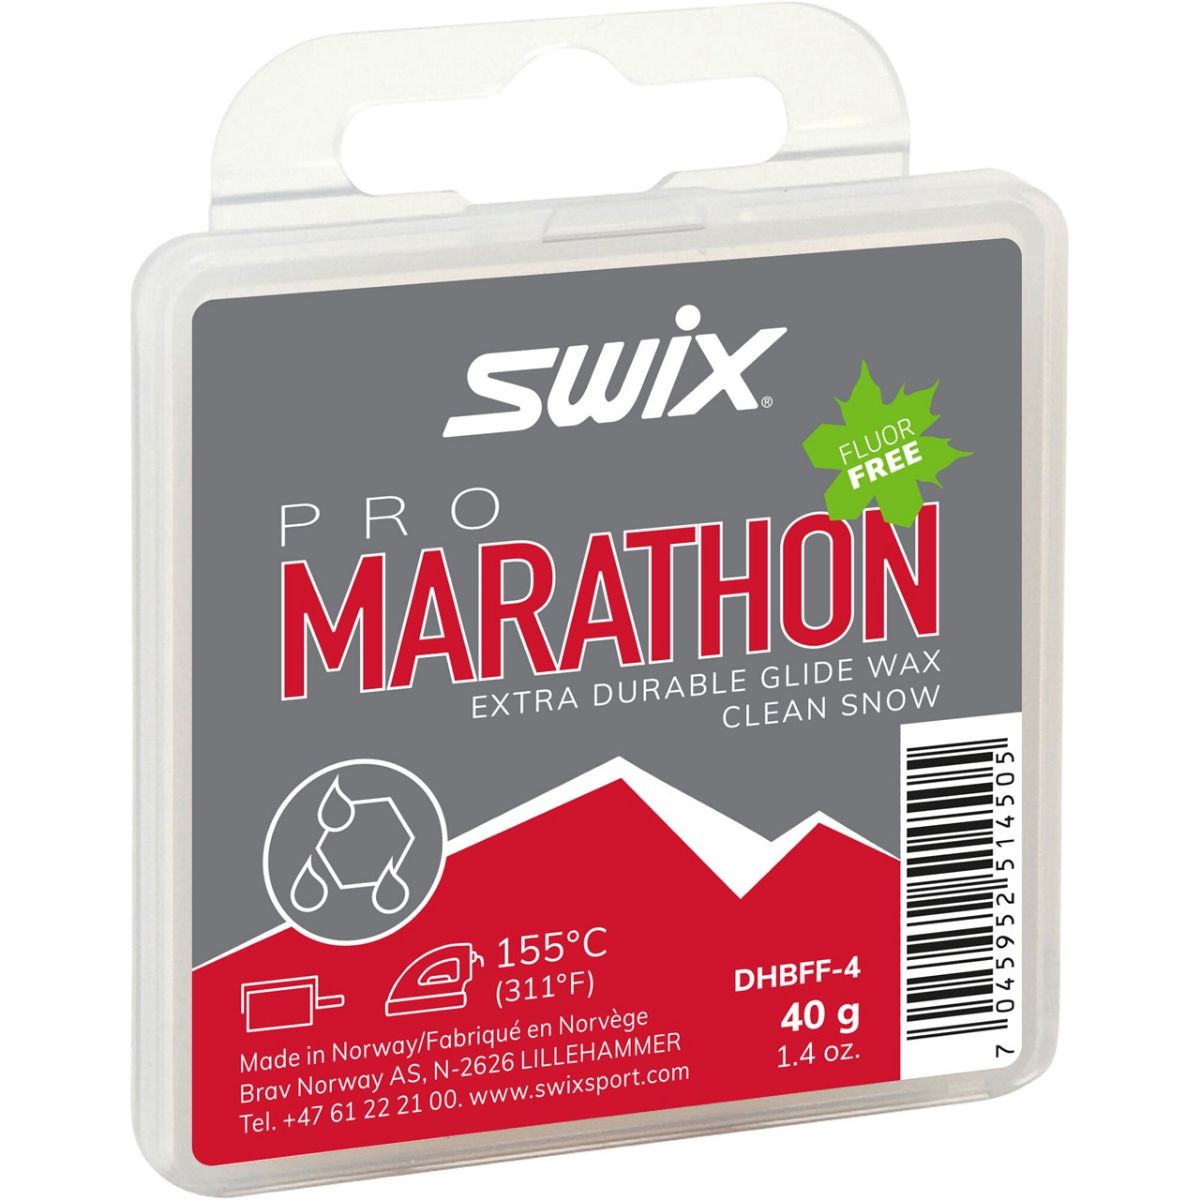 swix-marathon-fluor-fri-black-40g